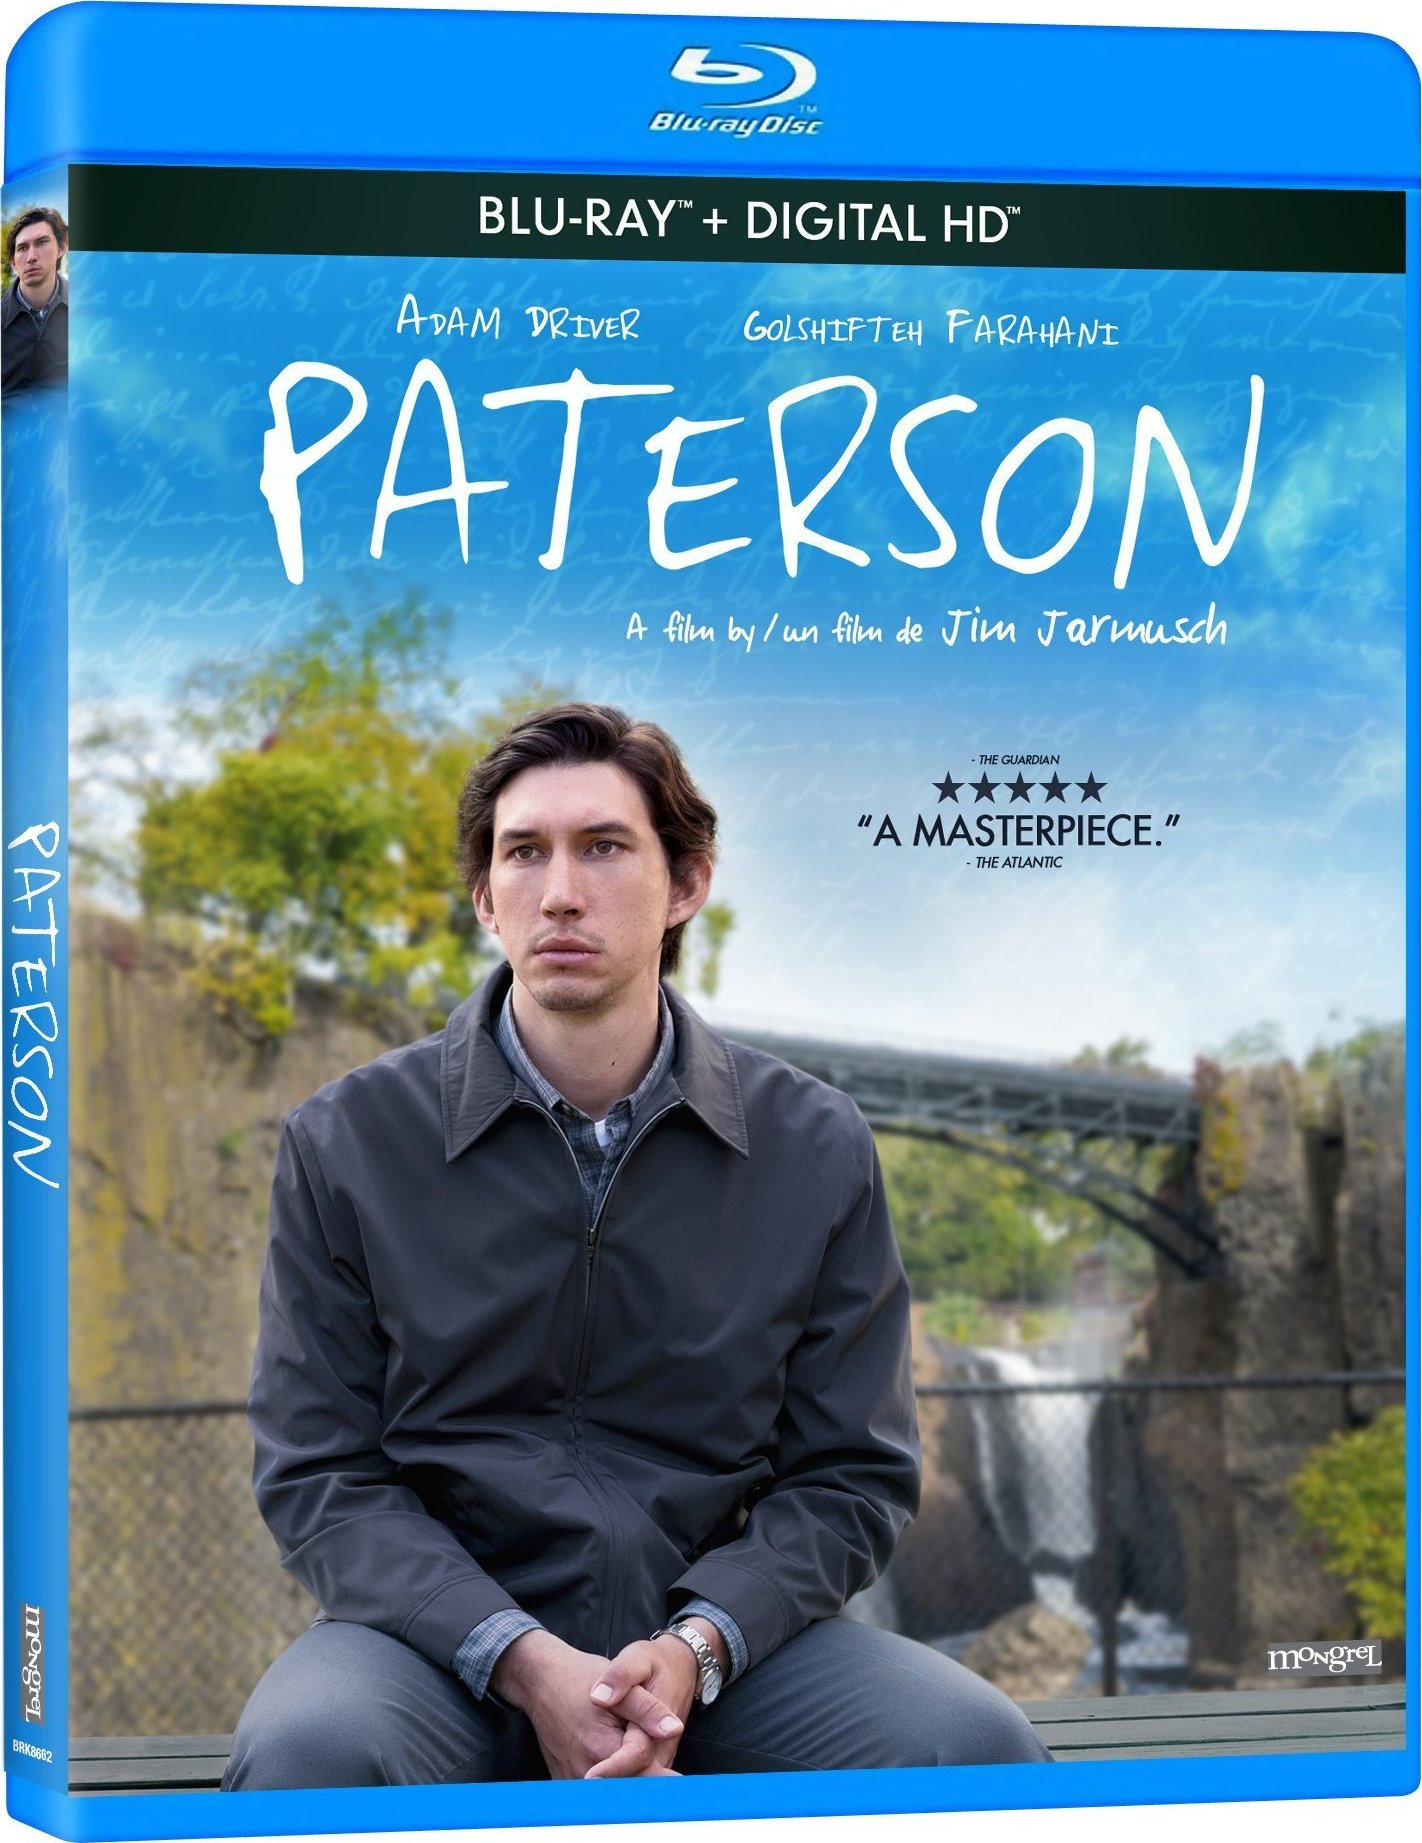 [帕特森].Paterson.2016.BluRay.1080p.AVC.DTS-HD.MA.5.1-F13@HDSpace[35.43G]